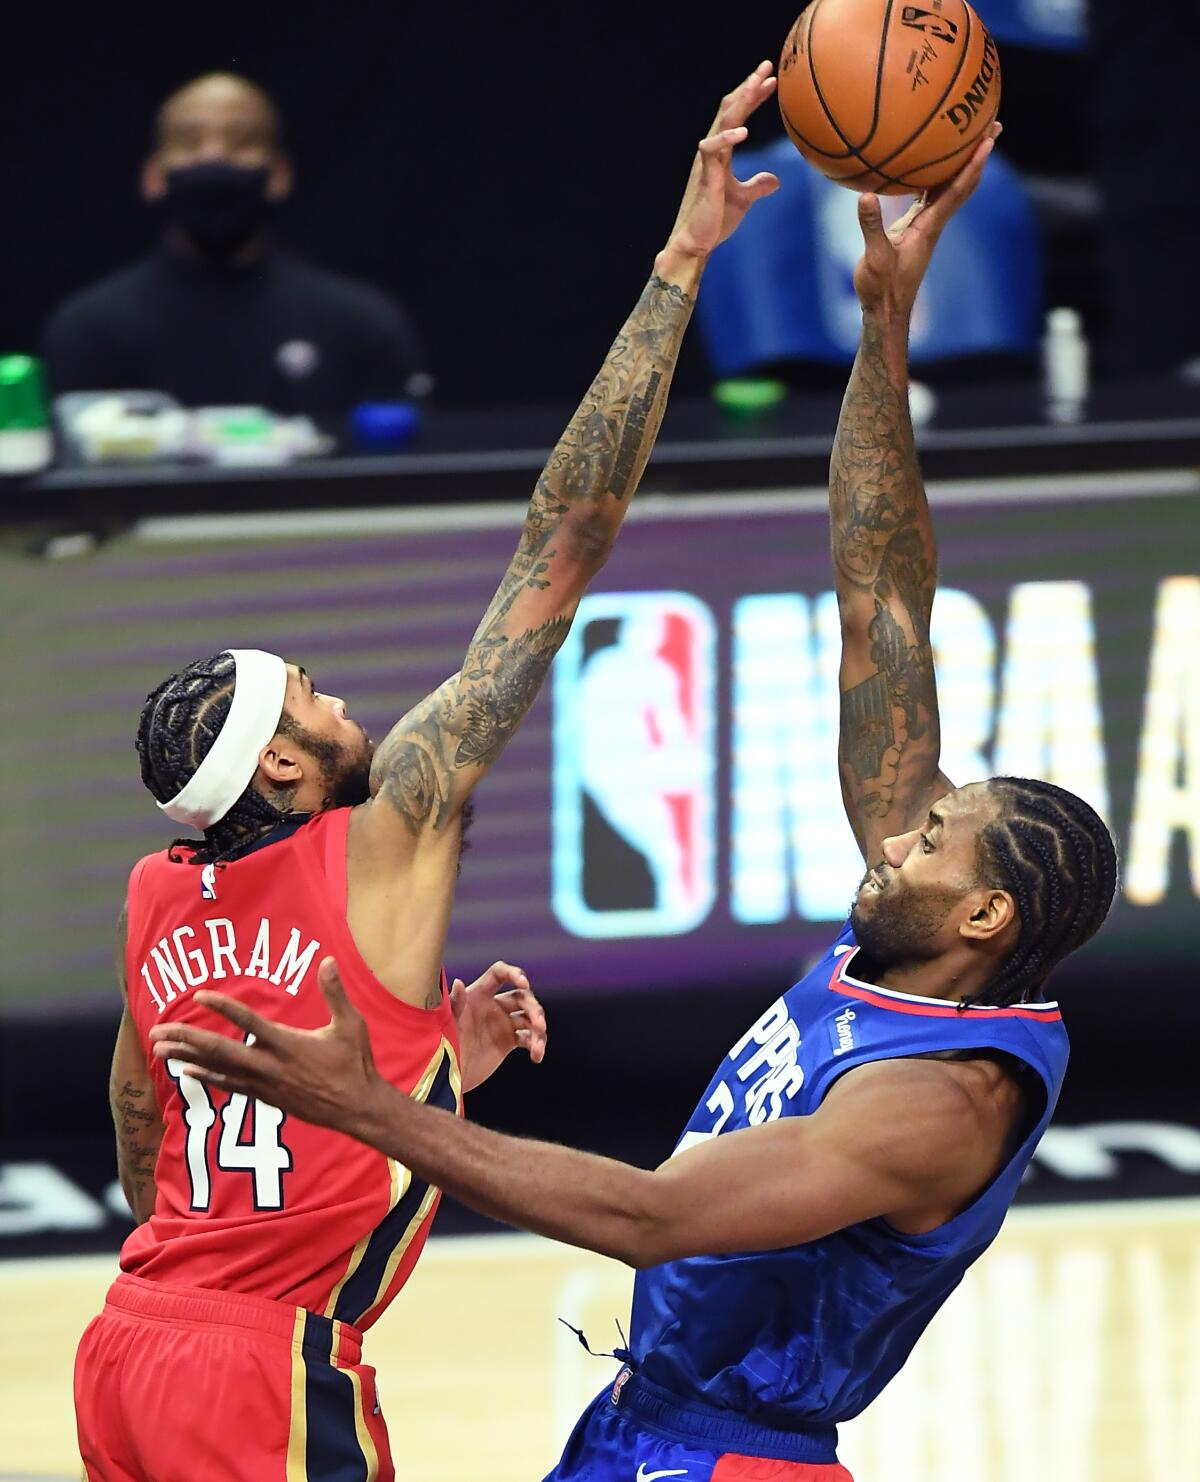 Clippers Kawhi Leonard has his shot blocked by New Orleans Pelicans Brandon Ingram